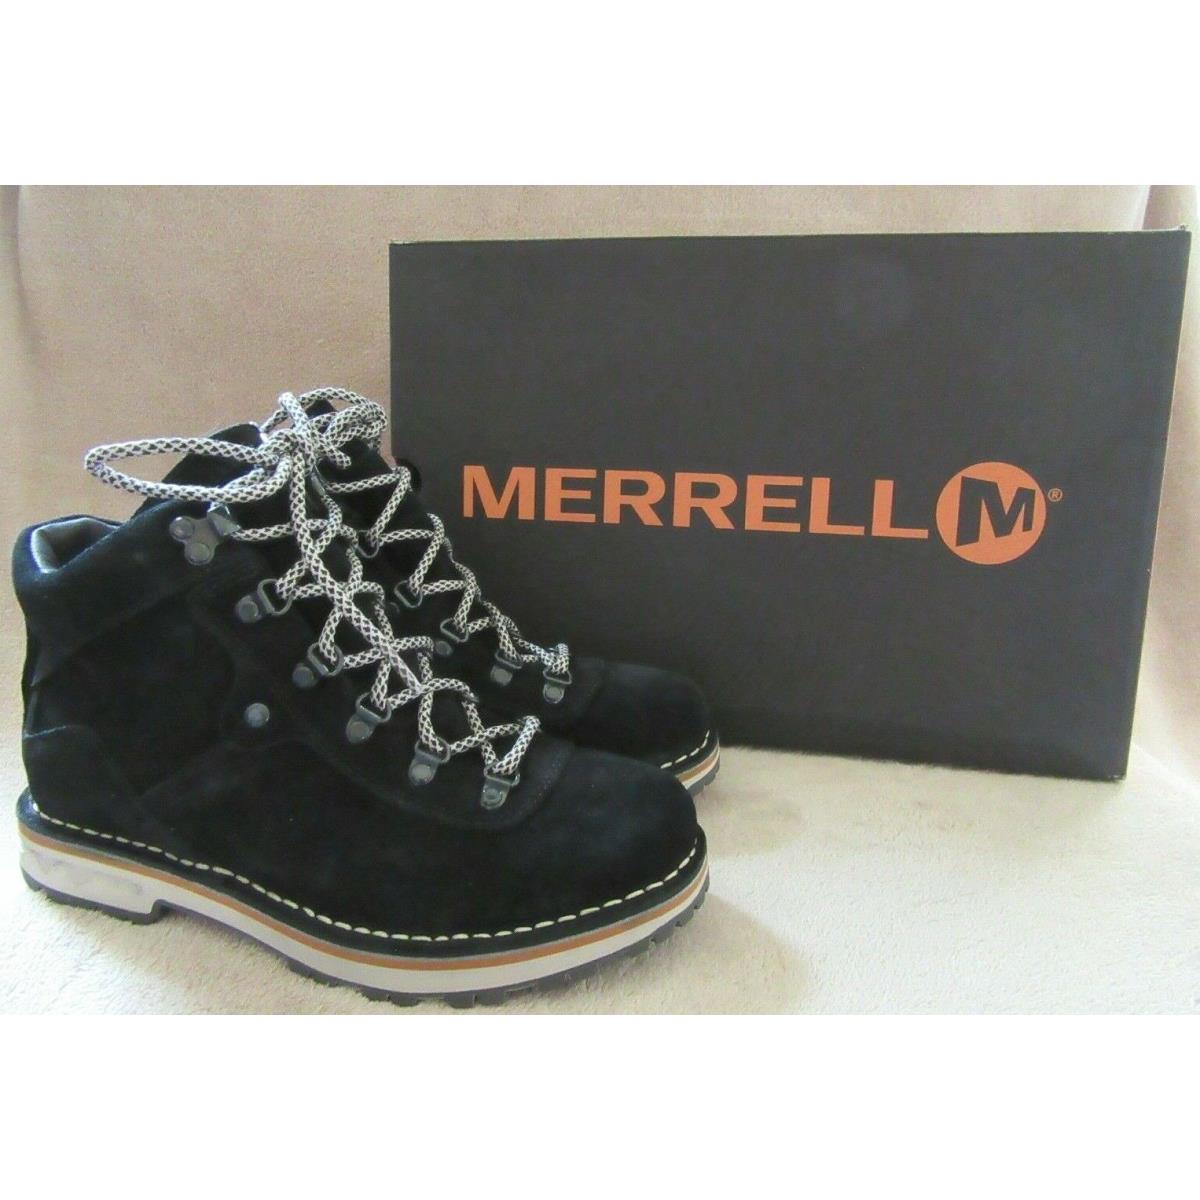 Merrell Sugarbush Waterproof Black Suede Leather Boots Shoes US 6 M Eur 36